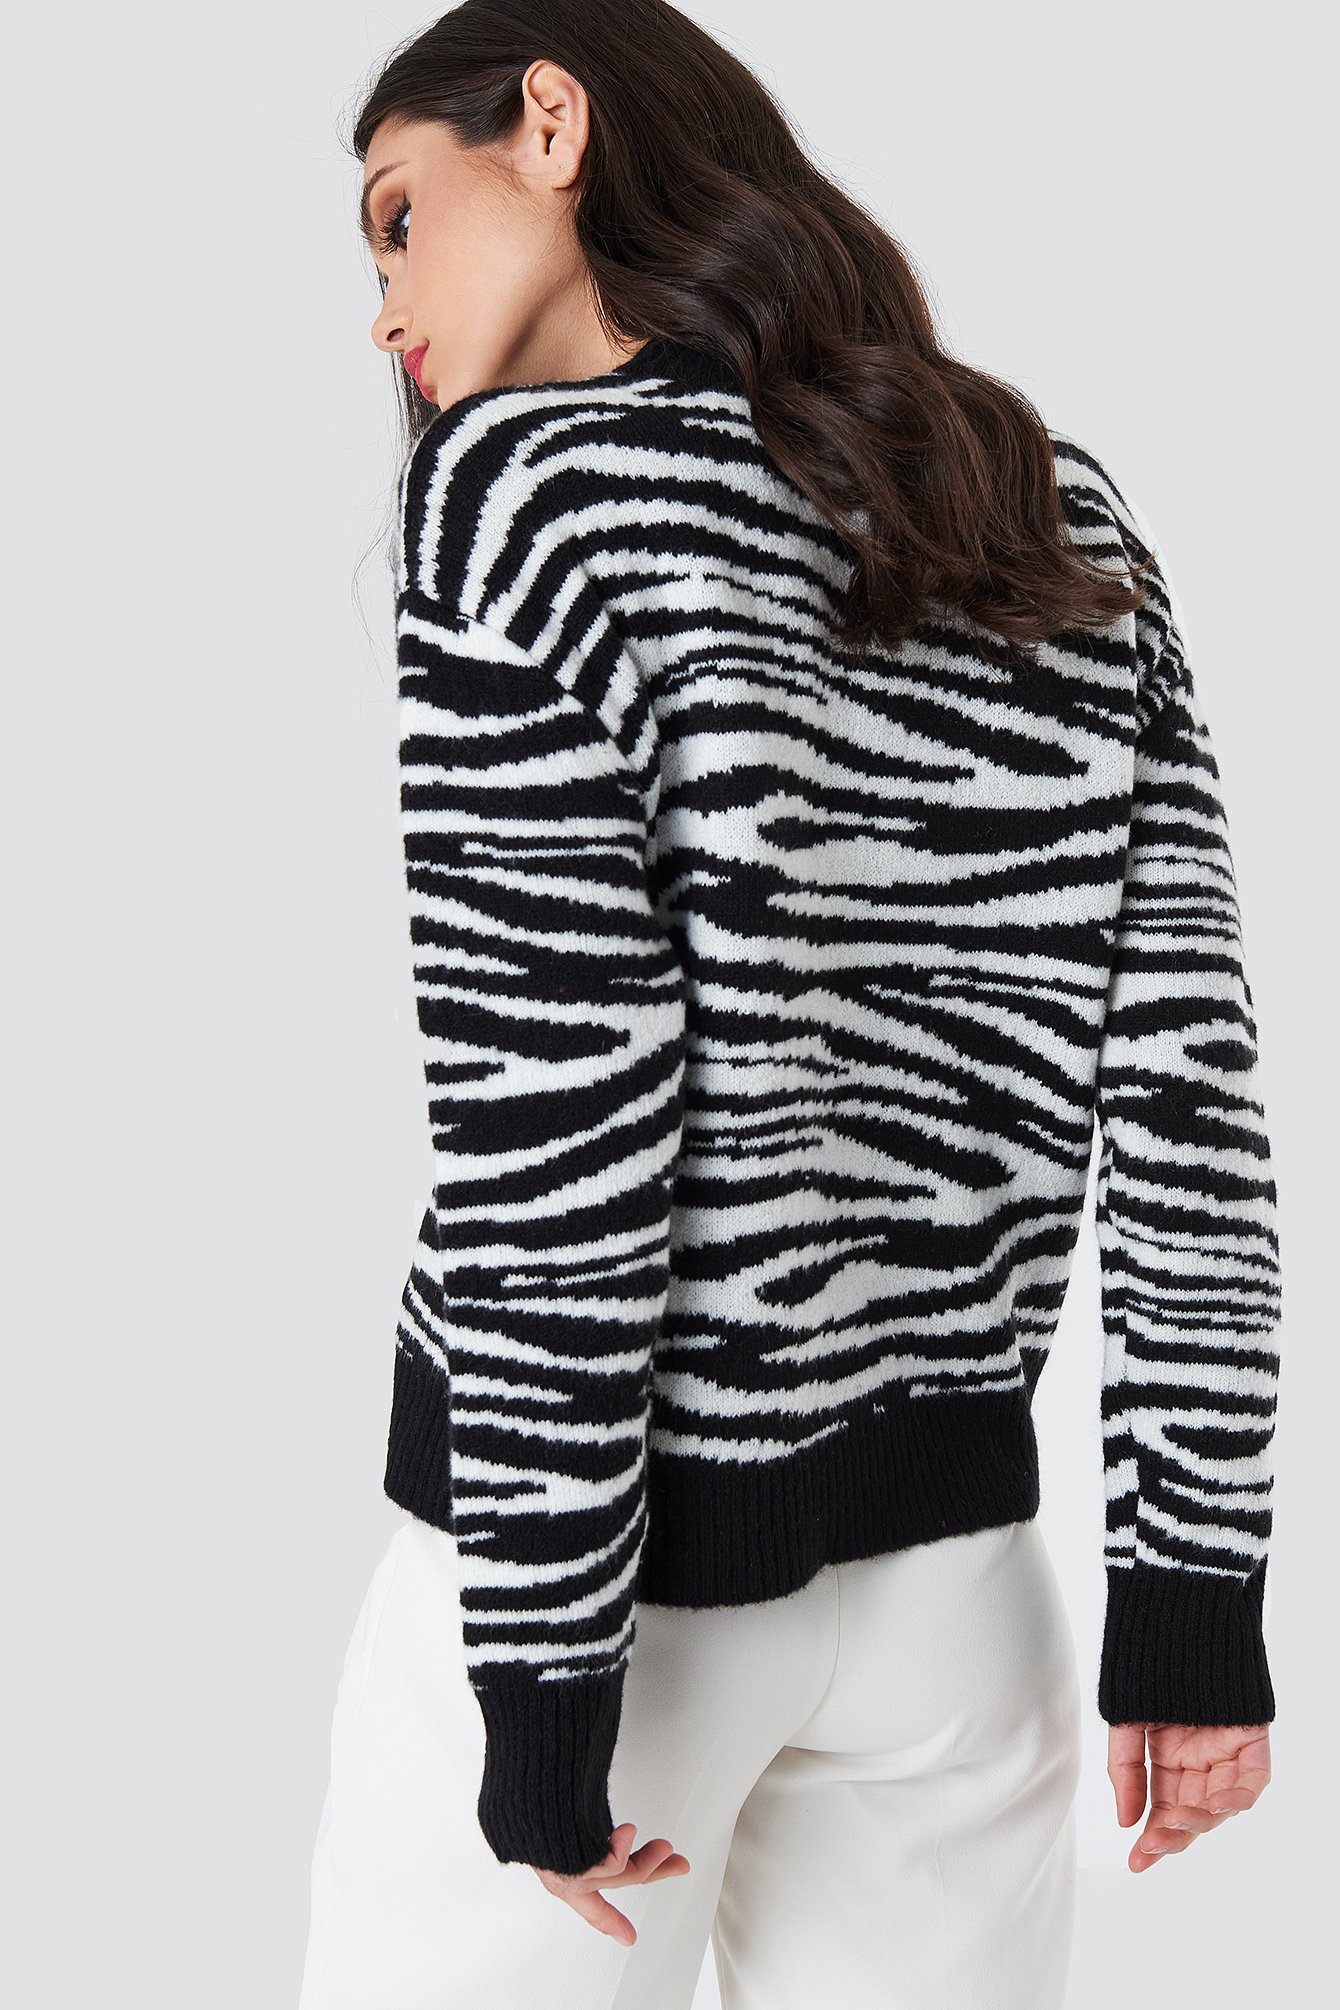 Black/White Zebra Knitted Sweater